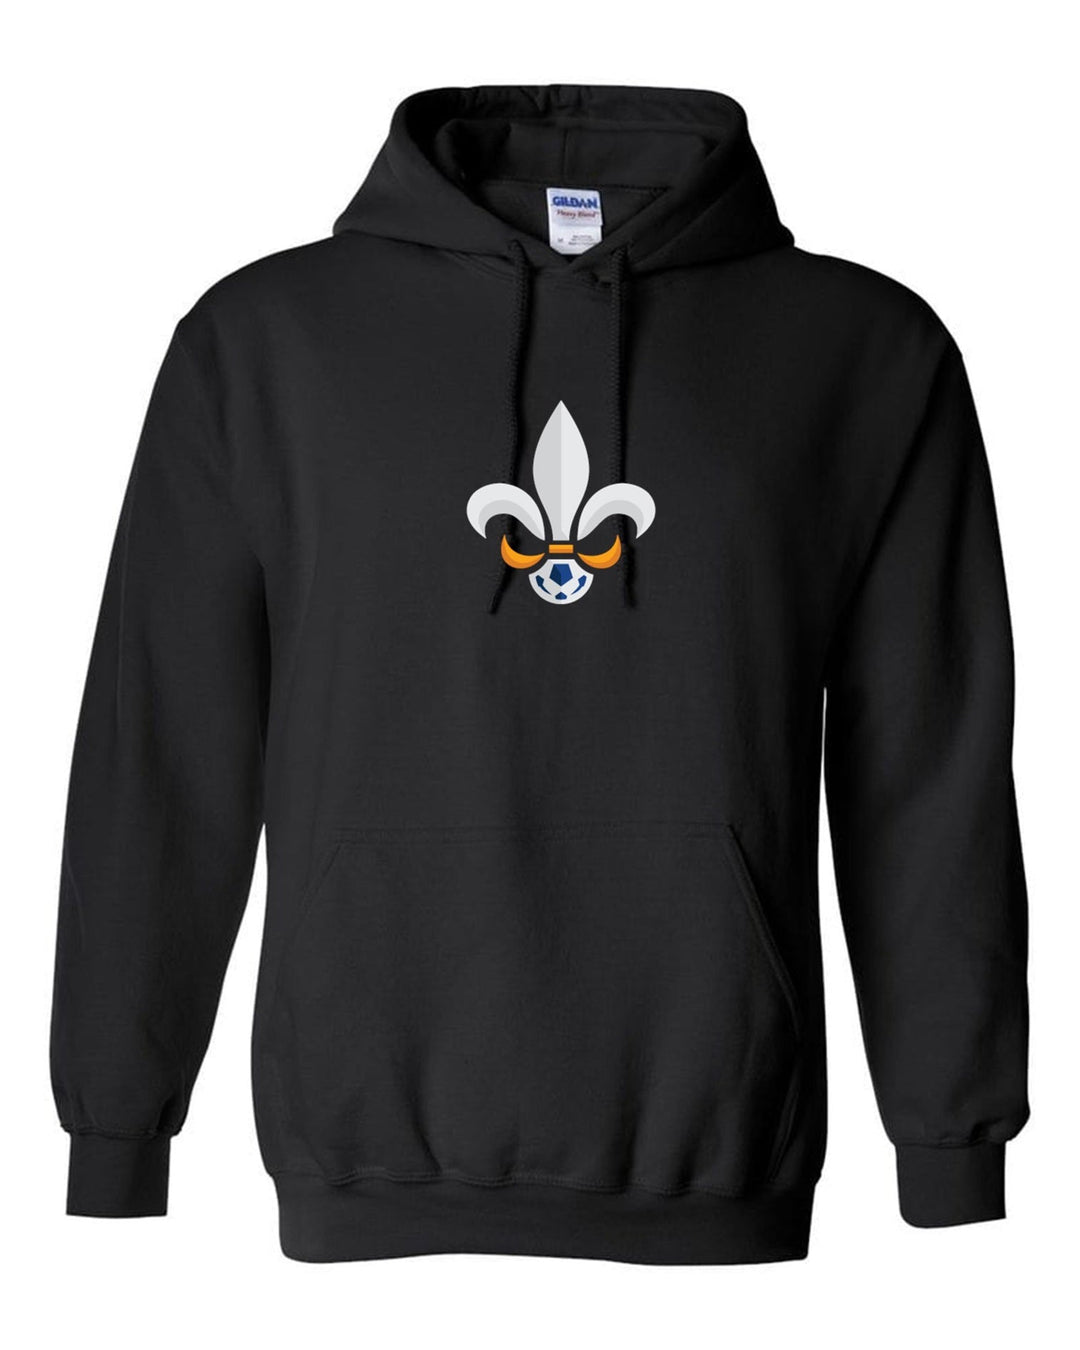 Louisiana Select Logo Hoody LA ODP Spiritwear Black Youth Small - Third Coast Soccer